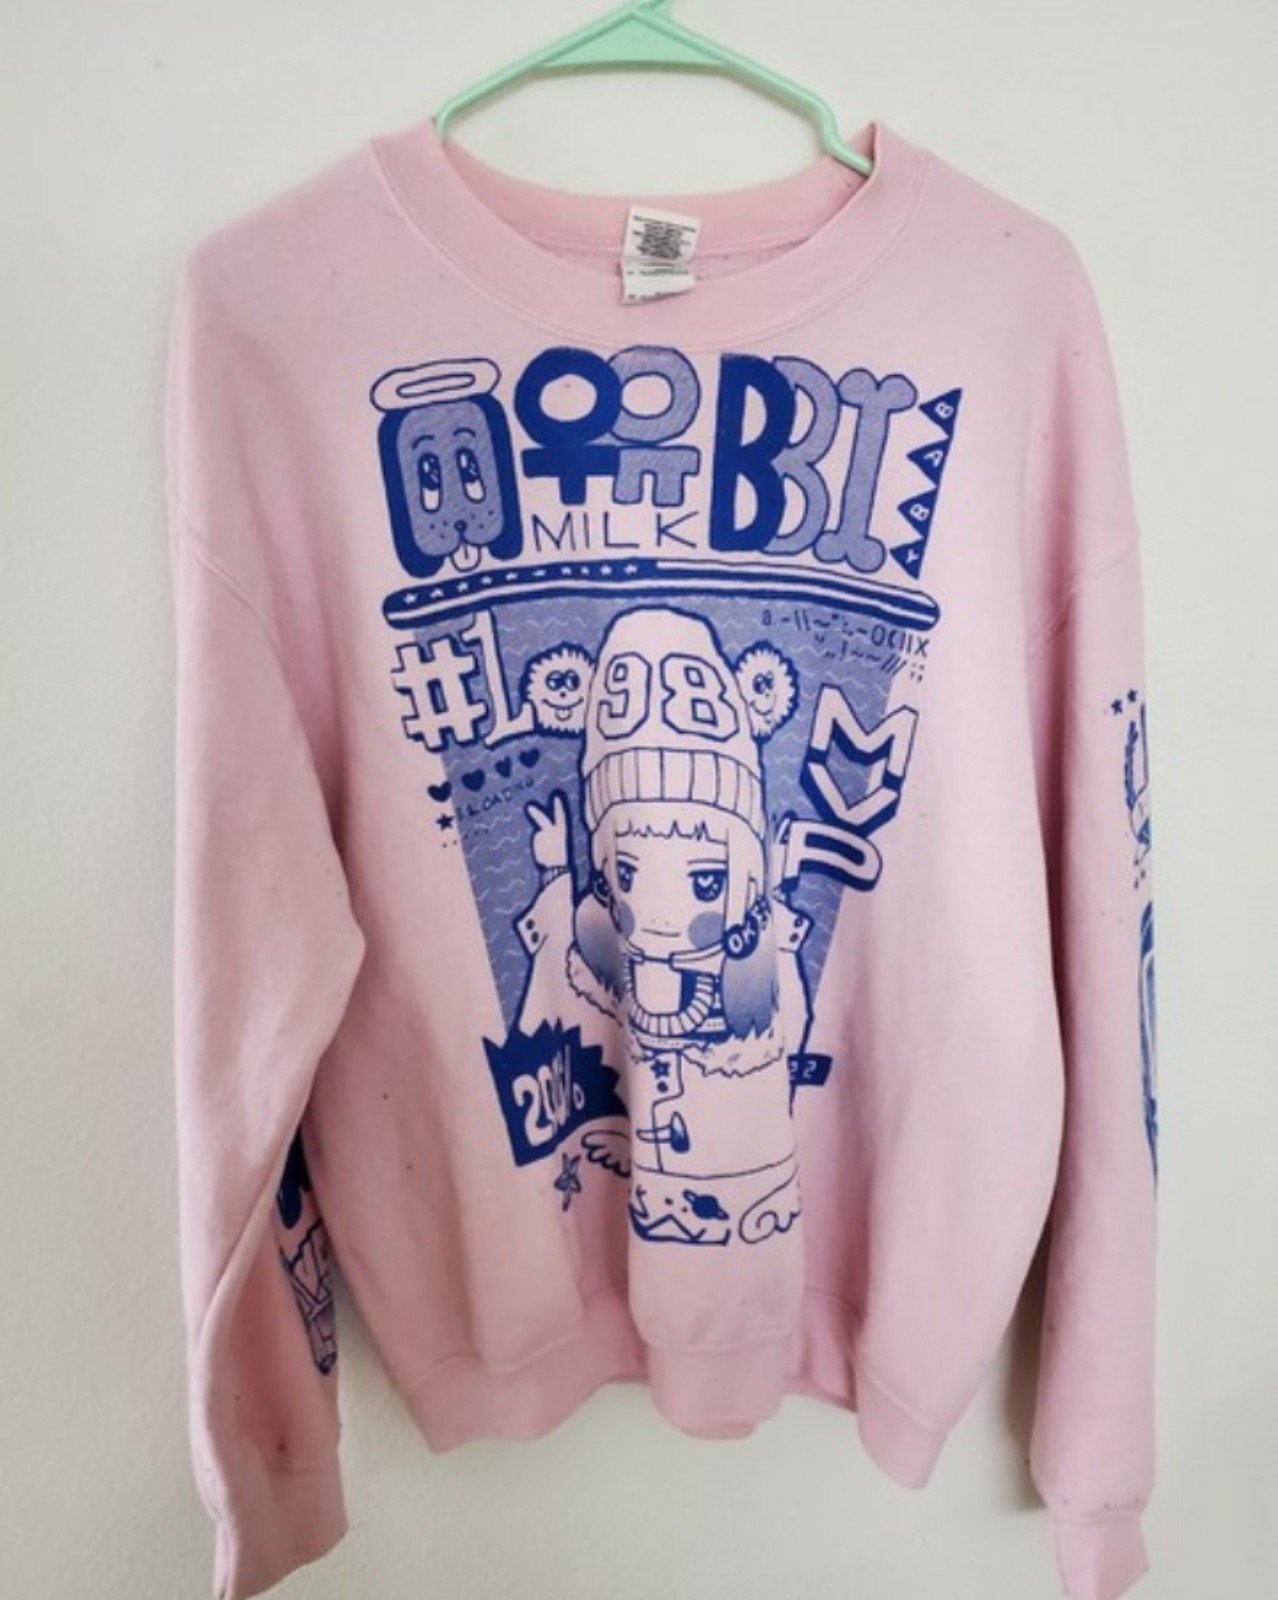 Stylish Milkbbi ultimate sweatshirt pink size small RARE discontinued PkloIVy7A Great